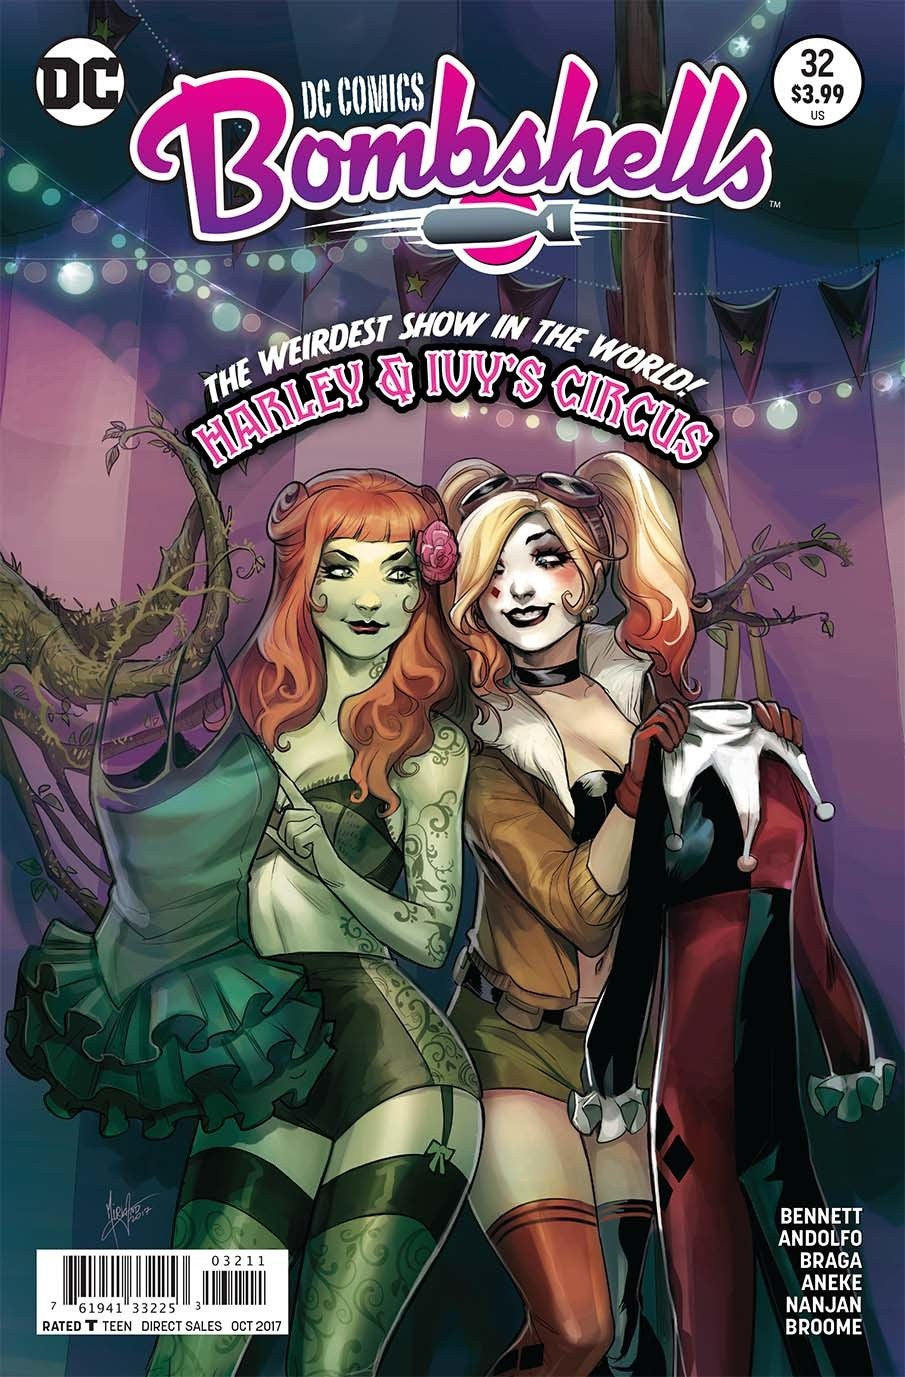 DC COMICS BOMBSHELLS #32 COVER